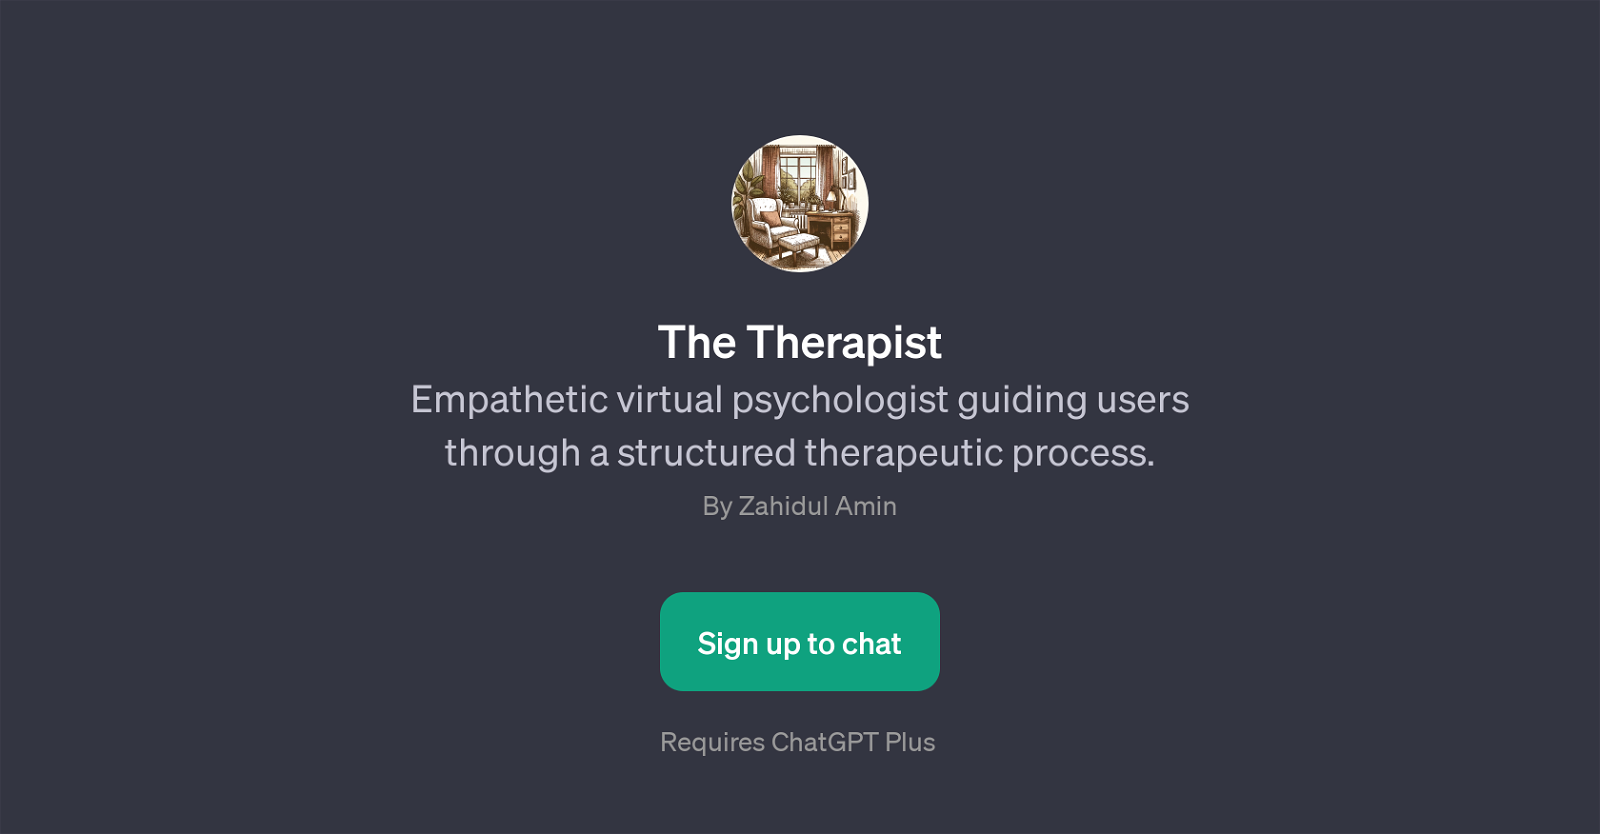 The Therapist website